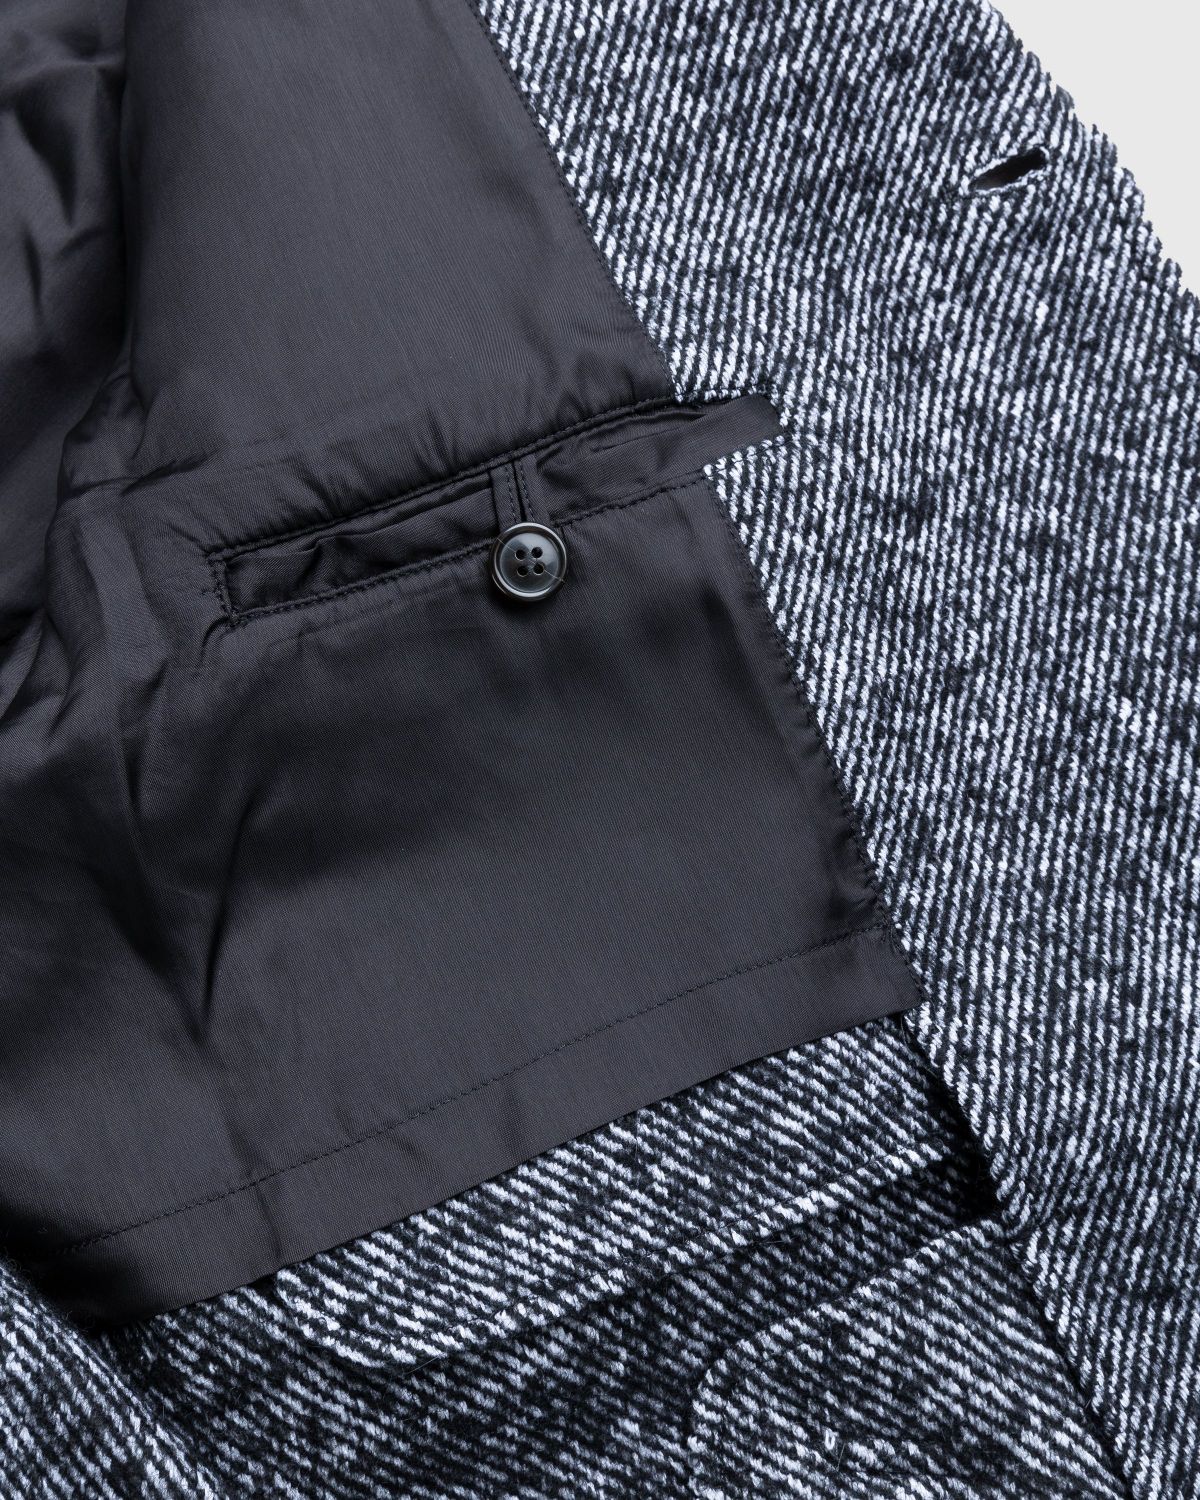 Kenzo – Coat Black - Outerwear - Black - Image 5